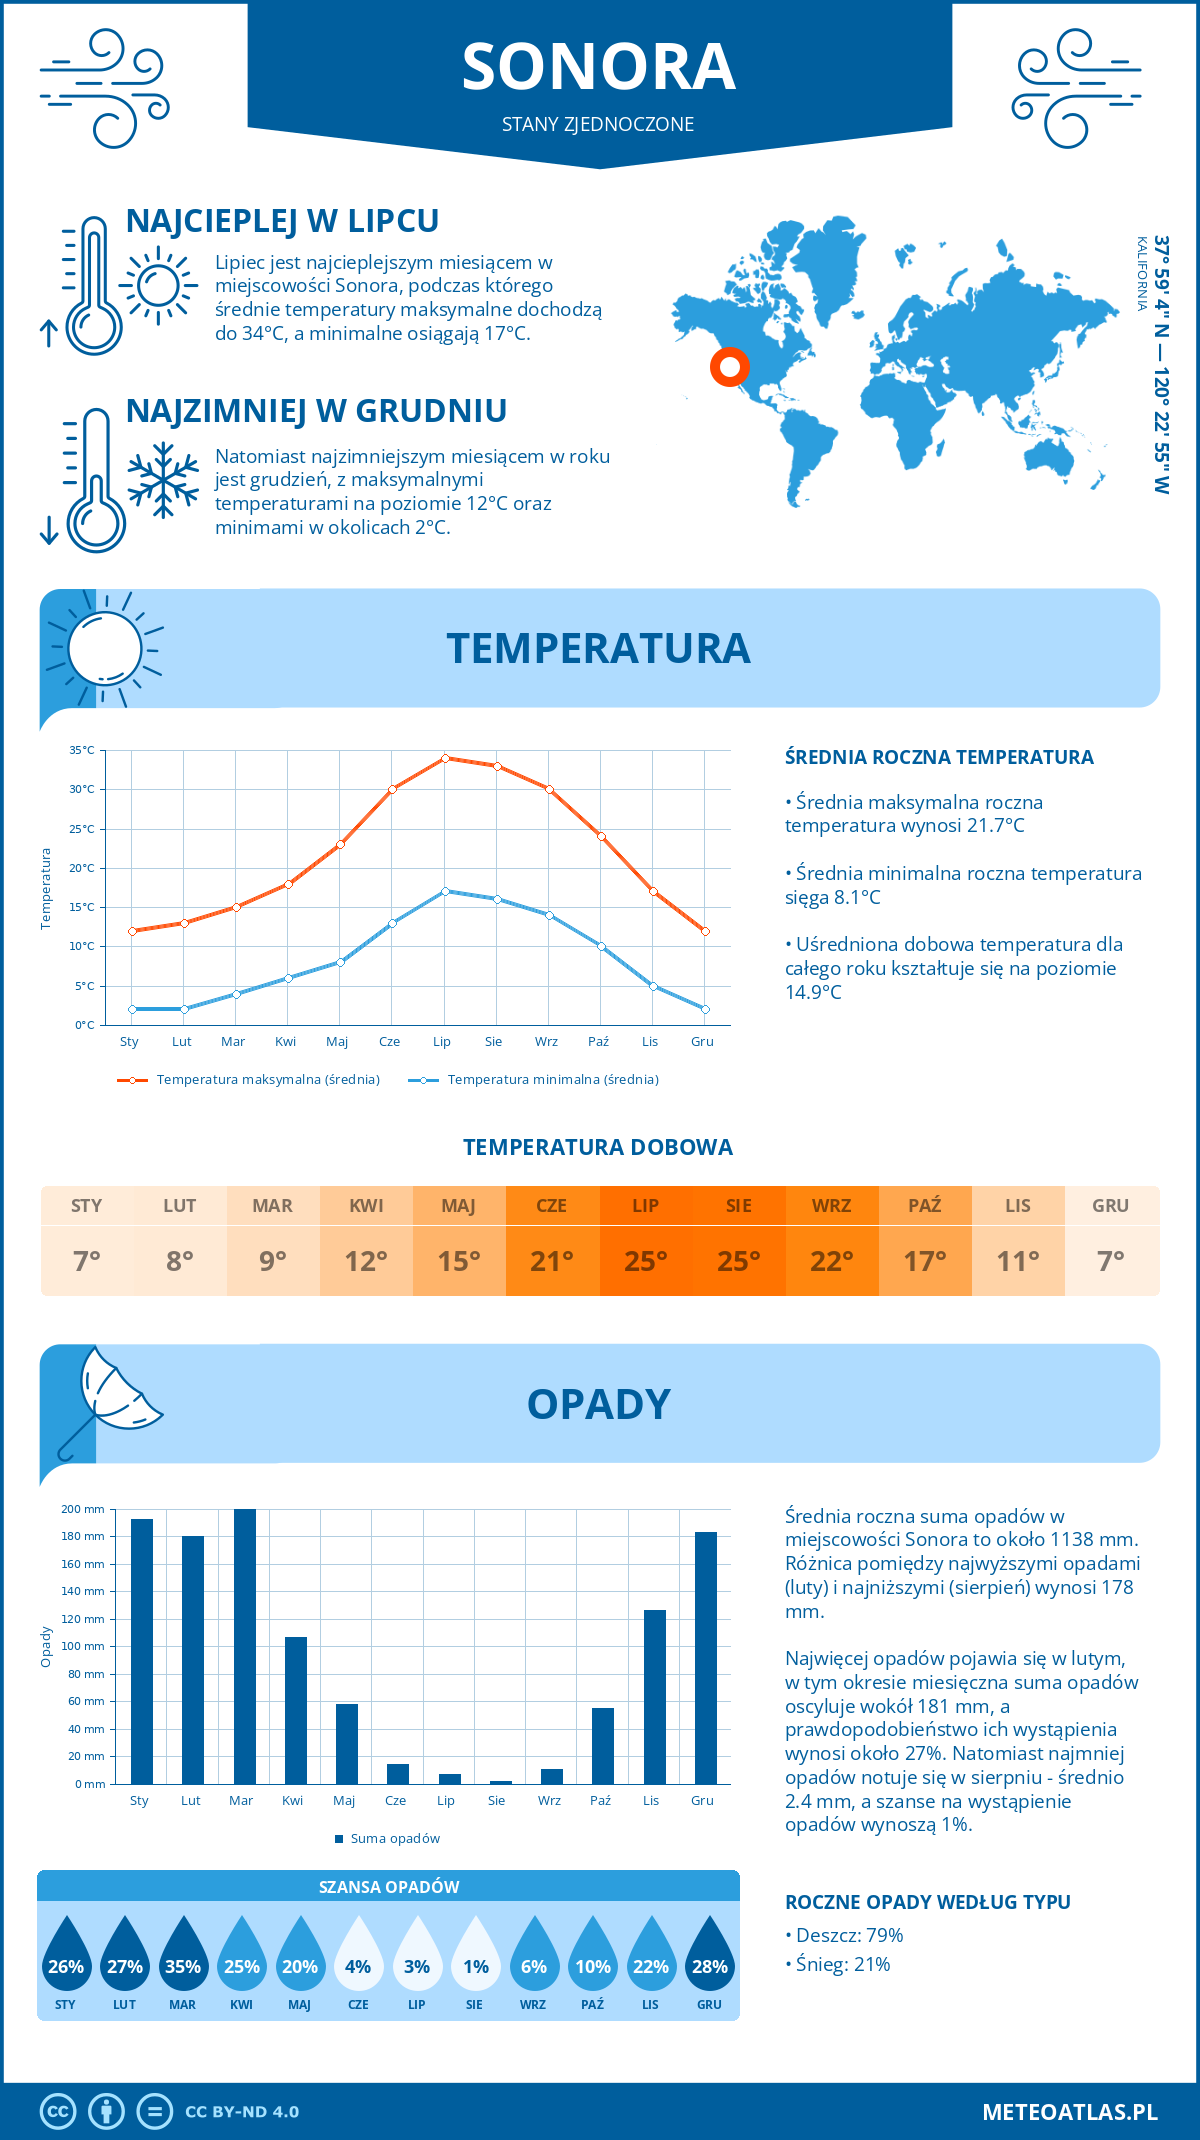 Pogoda Sonora (Stany Zjednoczone). Temperatura oraz opady.